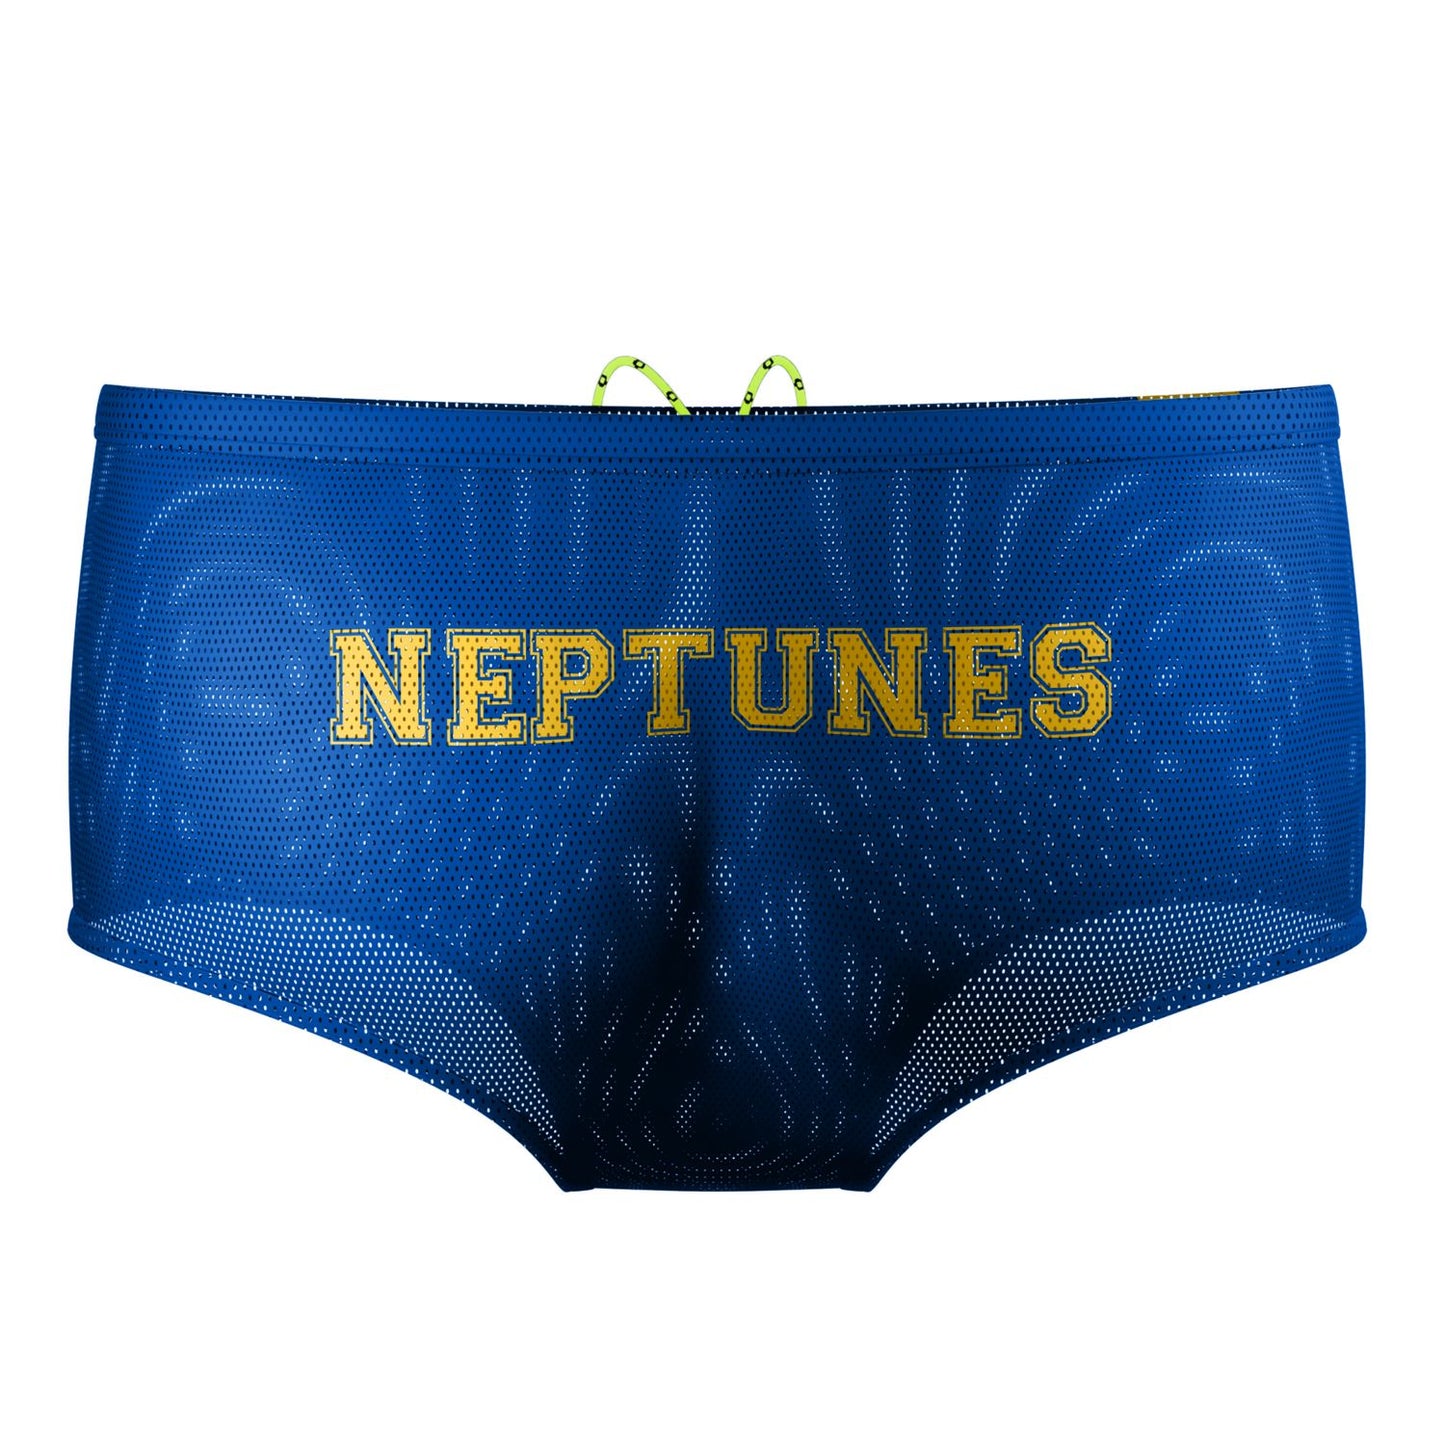 Neptunes Drag Suit